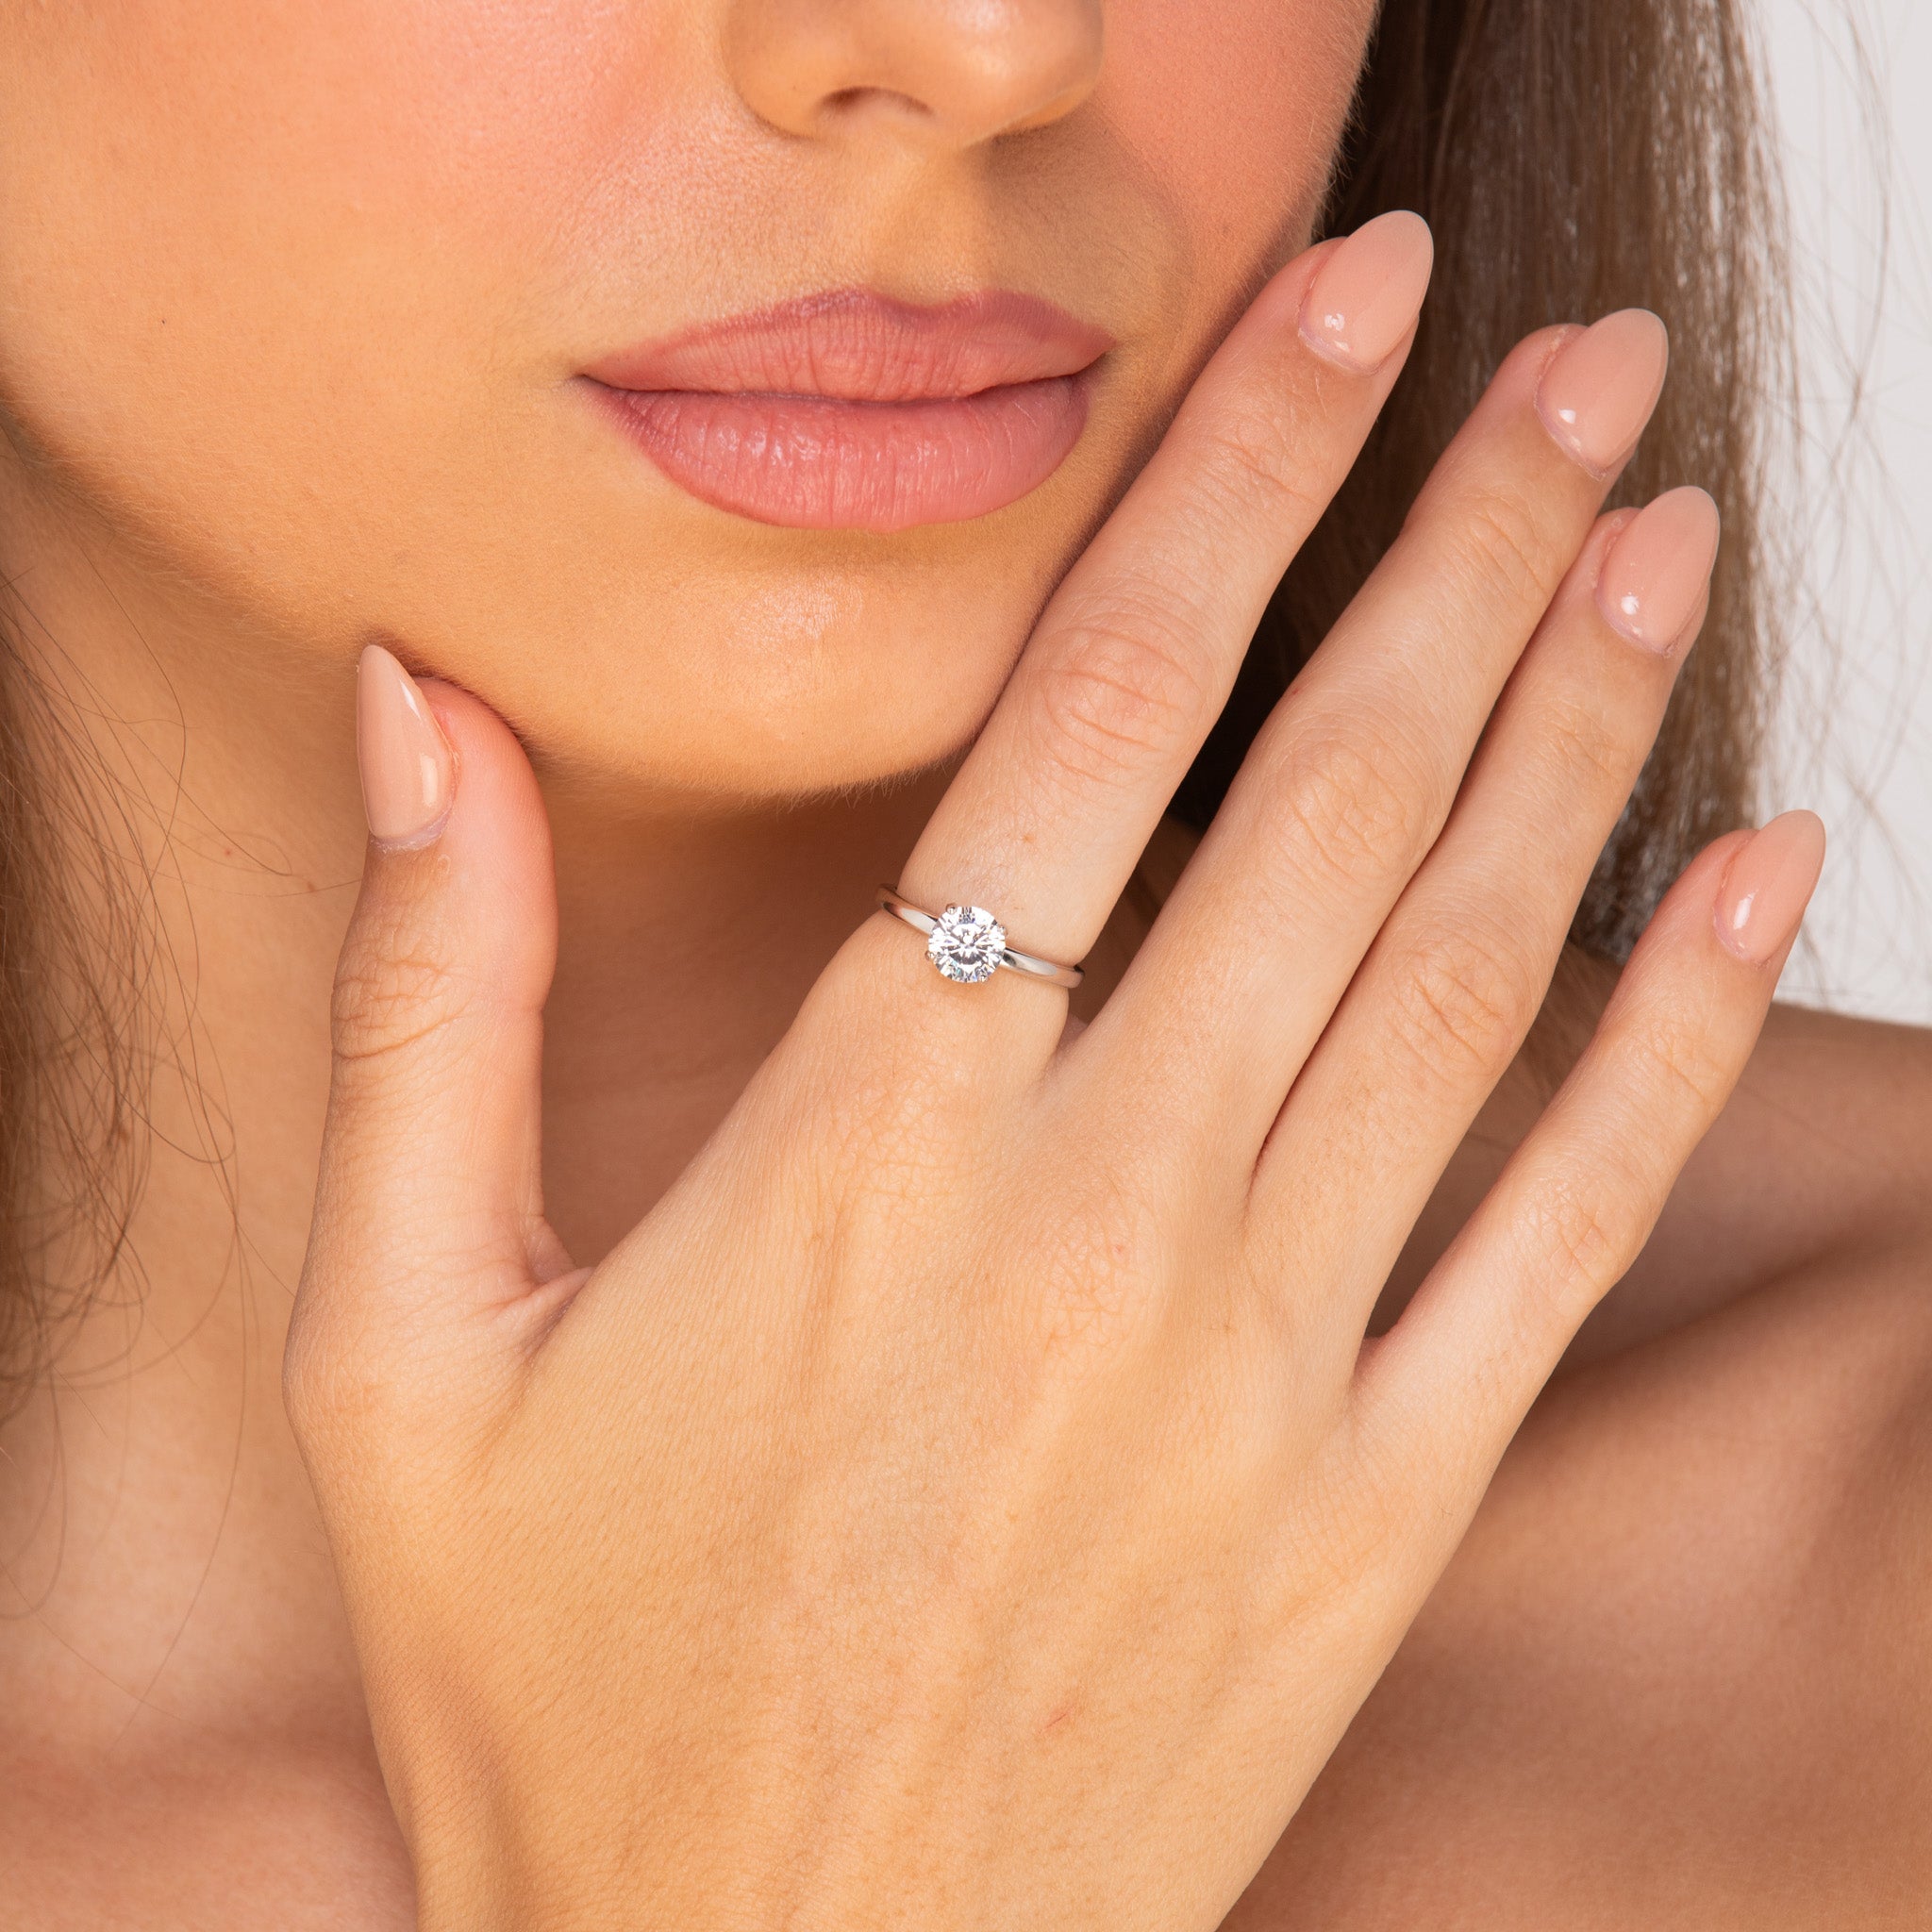 The Amelia Round Sapphire Engagement Wedding Ring